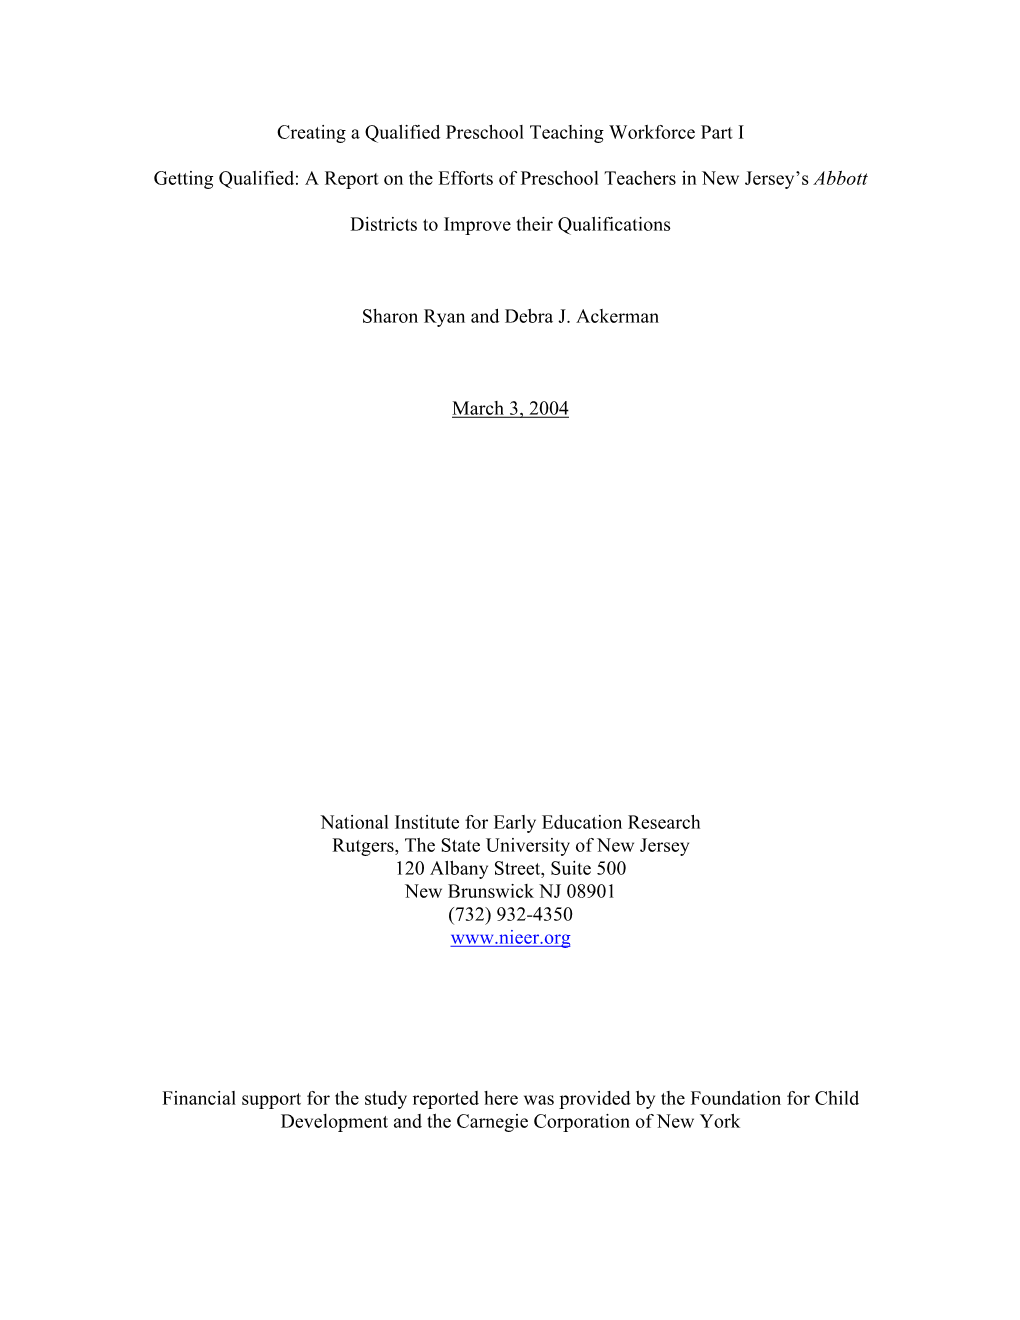 Getting Qualified: a Report on the Efforts of Preschool Teachers in New Jersey’S Abbott